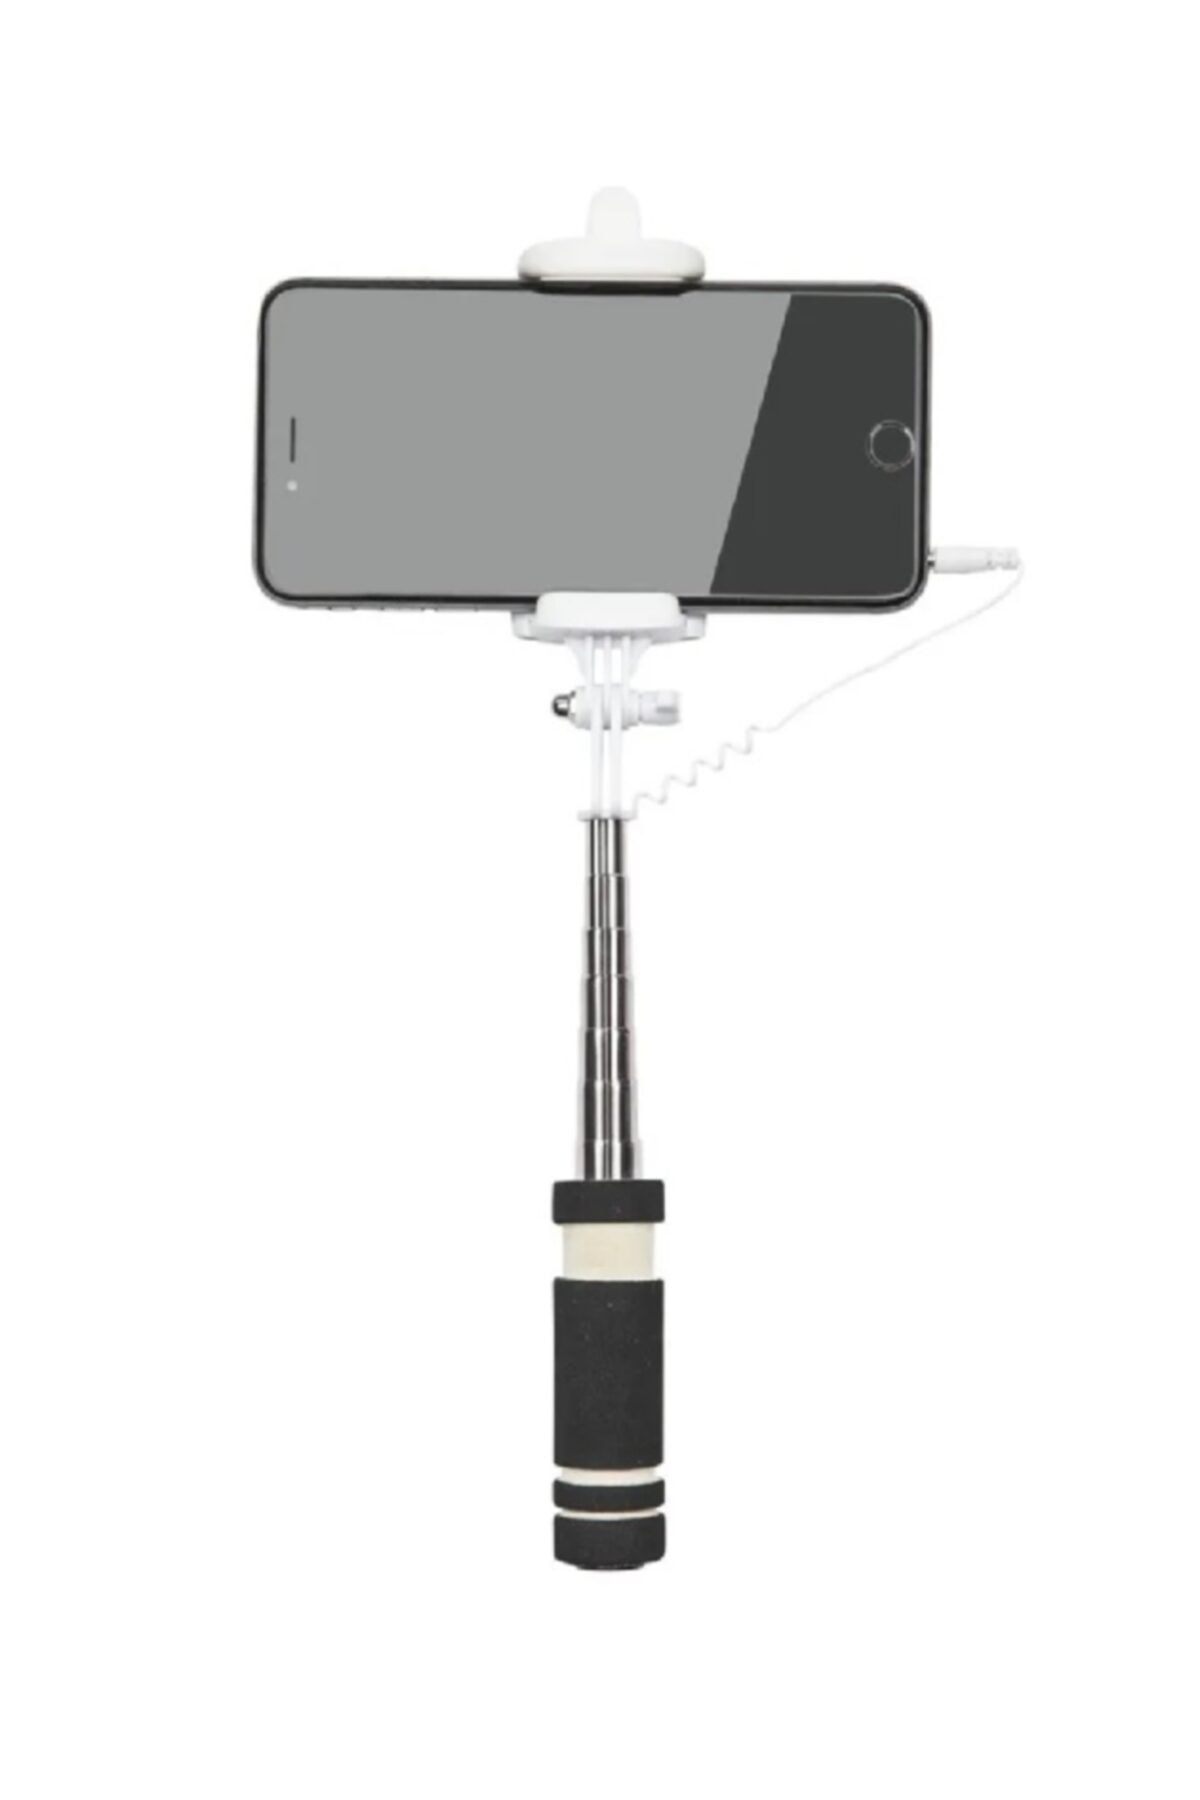 JUNGLEE Mini Selfie Çubuğu 3.5 Mm Jack Girişli Selfie Stick